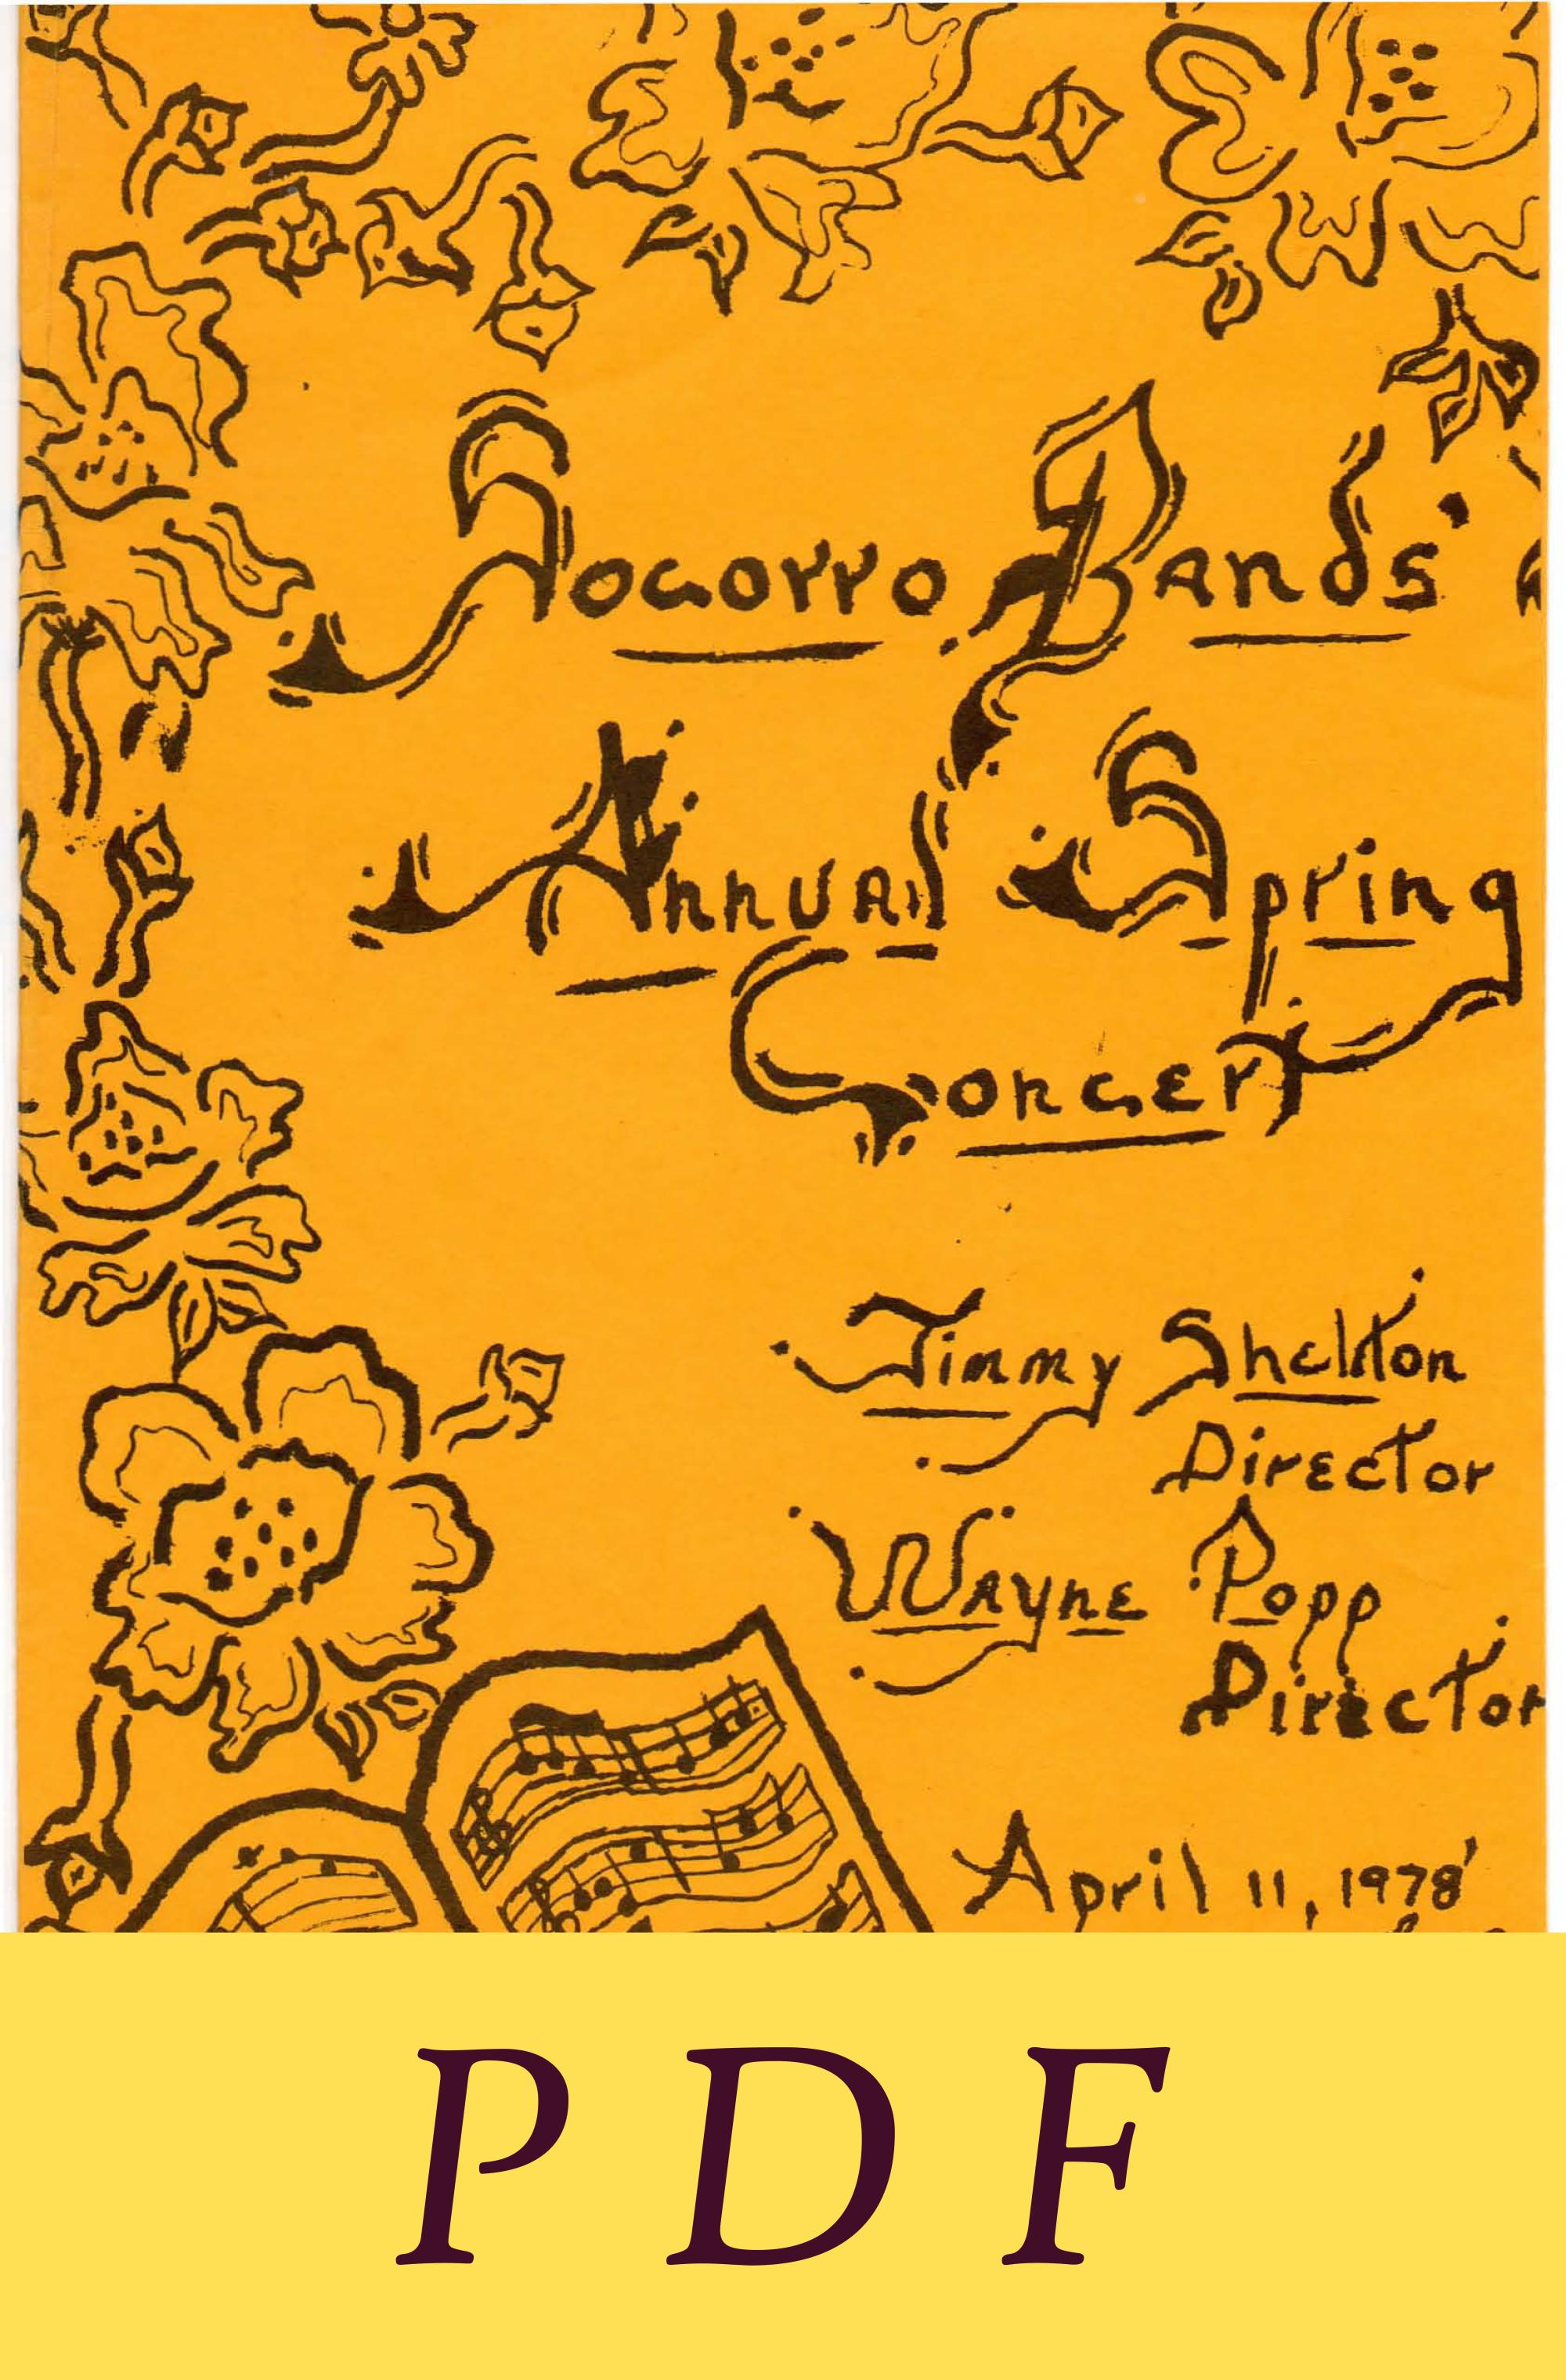 Socorro High Band (1979-1983) - Socorro Bands Spring Concert Program